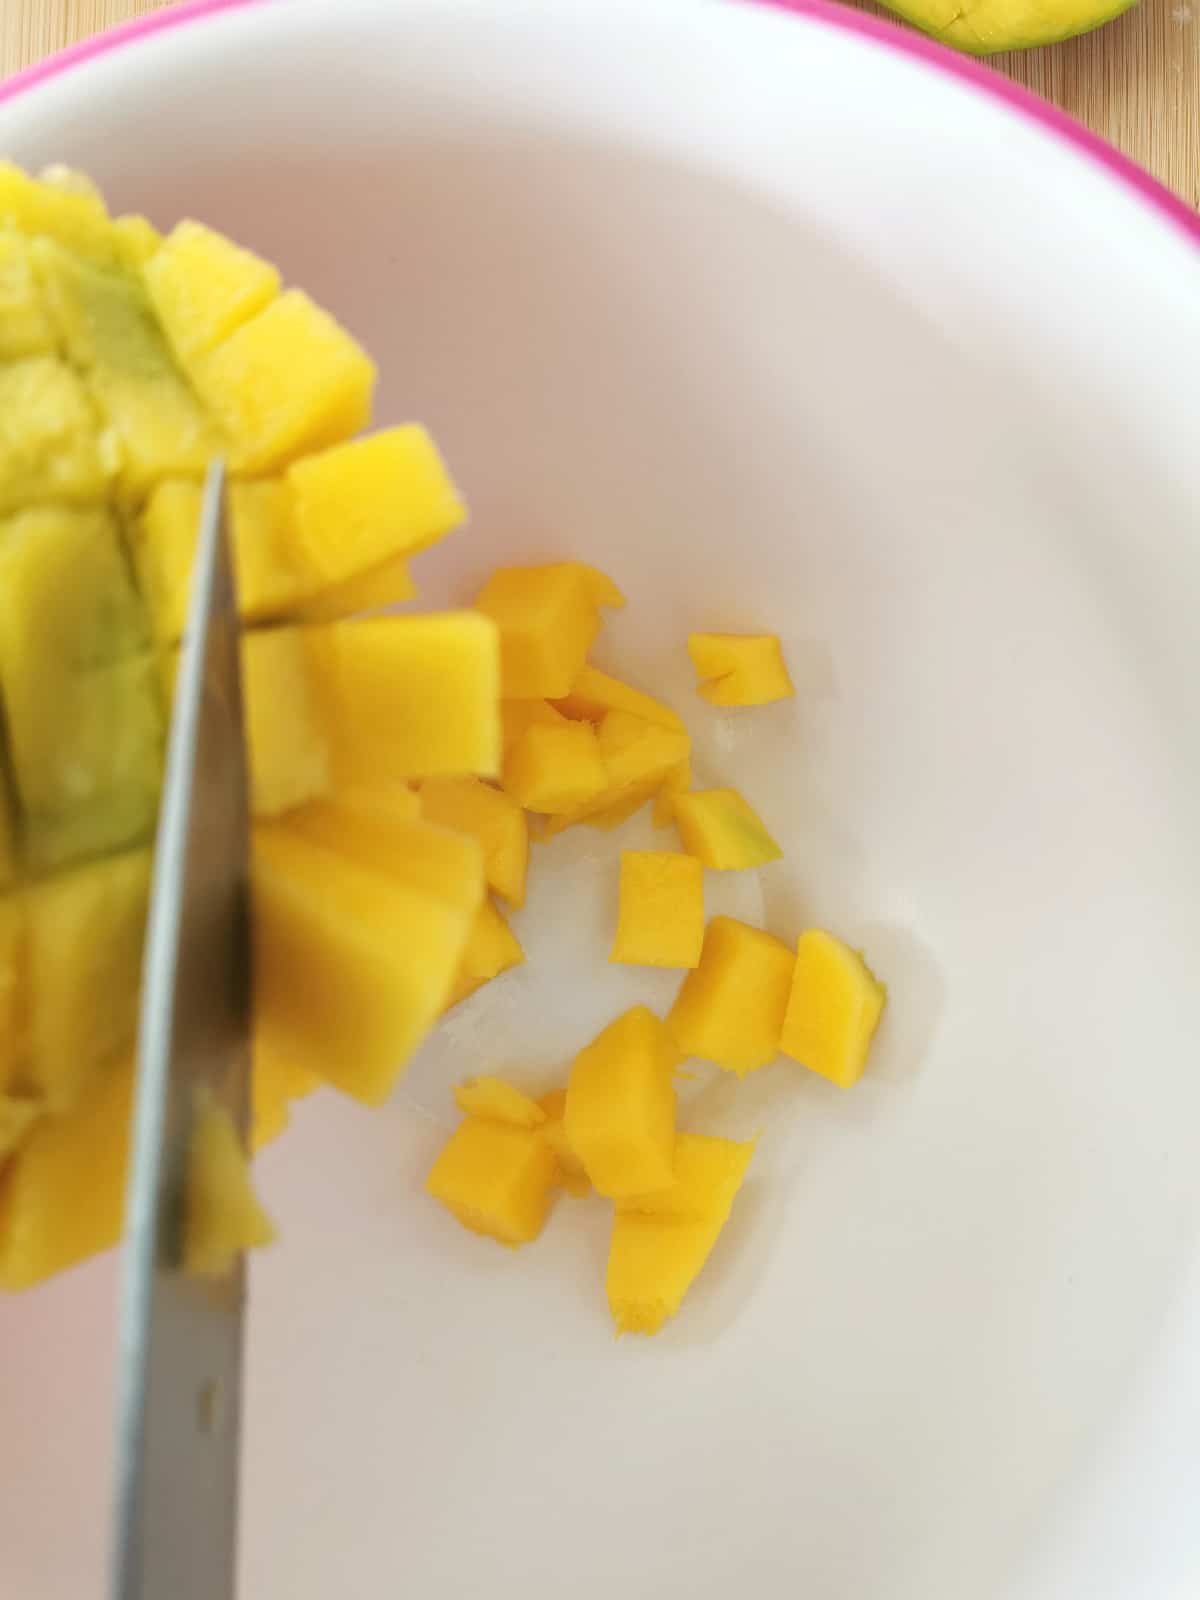 knife slicing cut up mango pieces from mango skin.